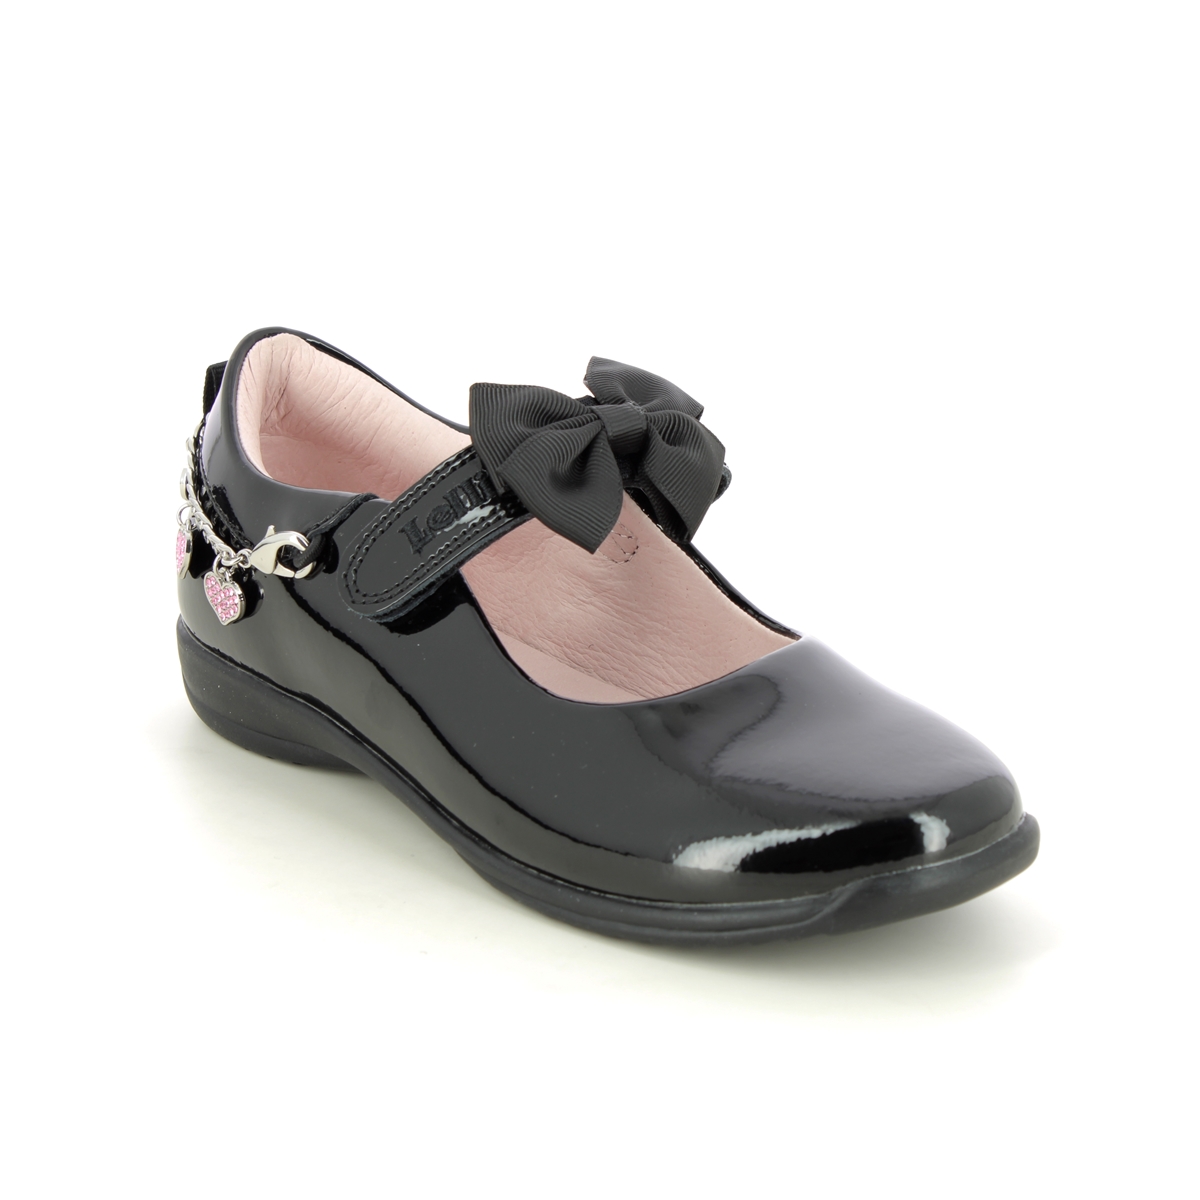 Lelli Kelly - Angel Bracelet F In Black Patent Lk8224-Db01 In Size 28 In Plain Black Patent Girls Shoes  In Black Patent For School For kids